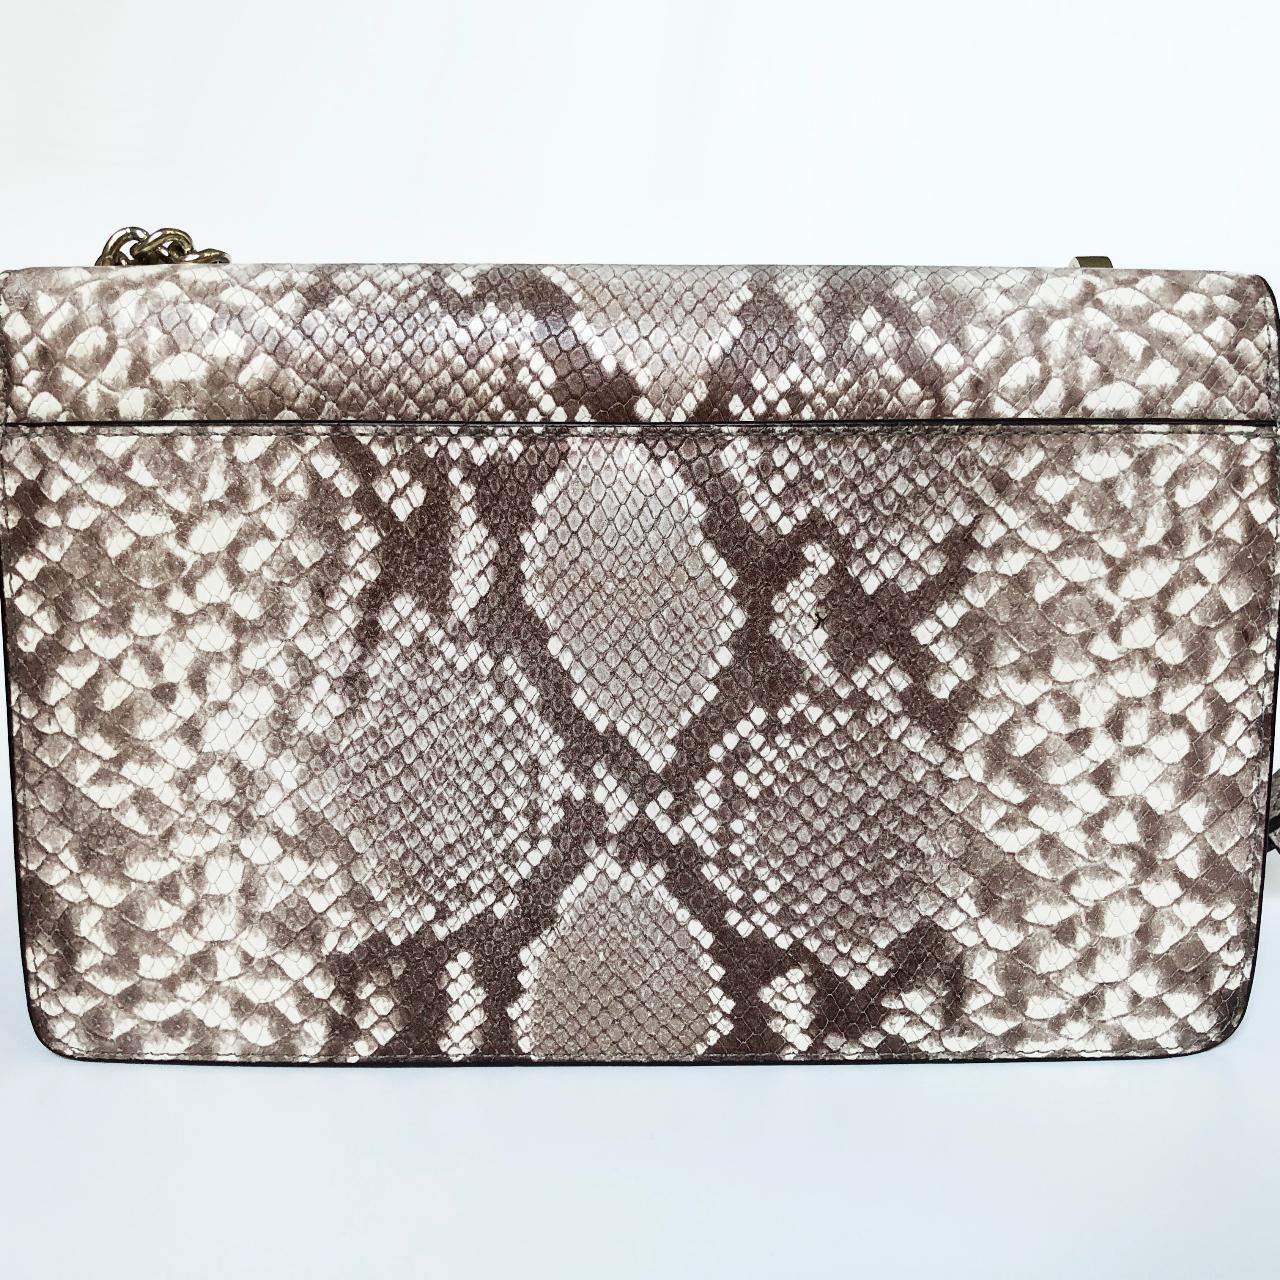 Product Image 2 - DKNY beige python crossbody bag,